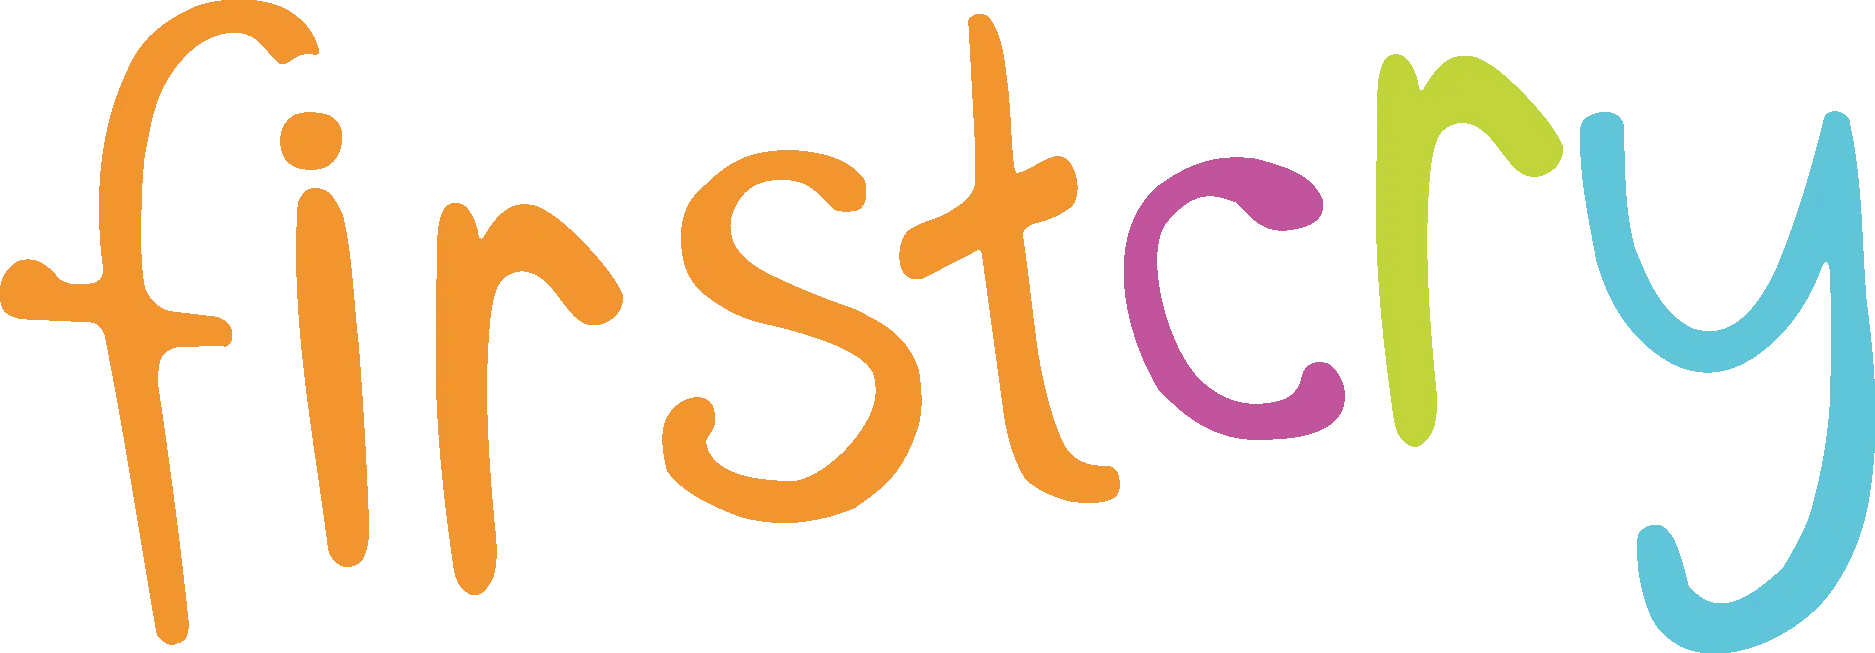 Firstcry Logo Vector.svg